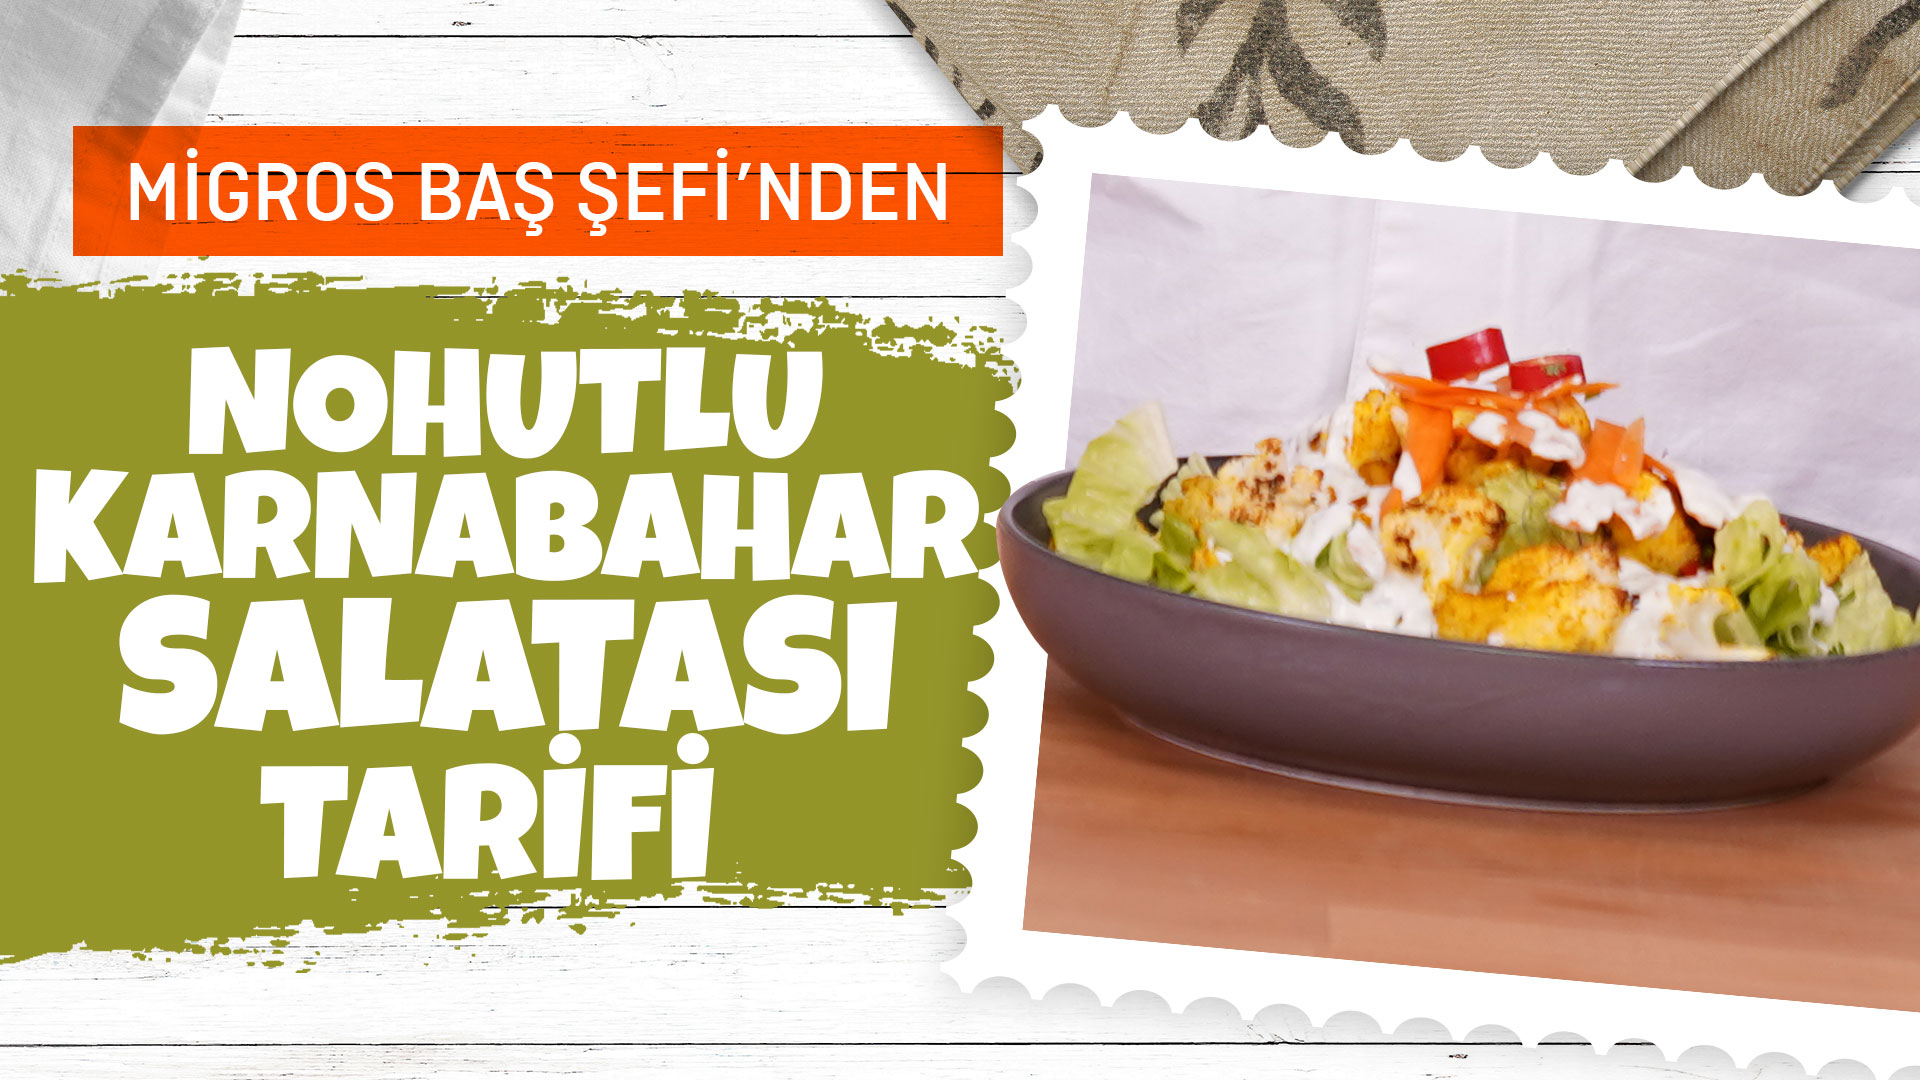 Nohutlu Karnabahar Salatası Tarifi | Migros Baş Şefi’nden Tarifler